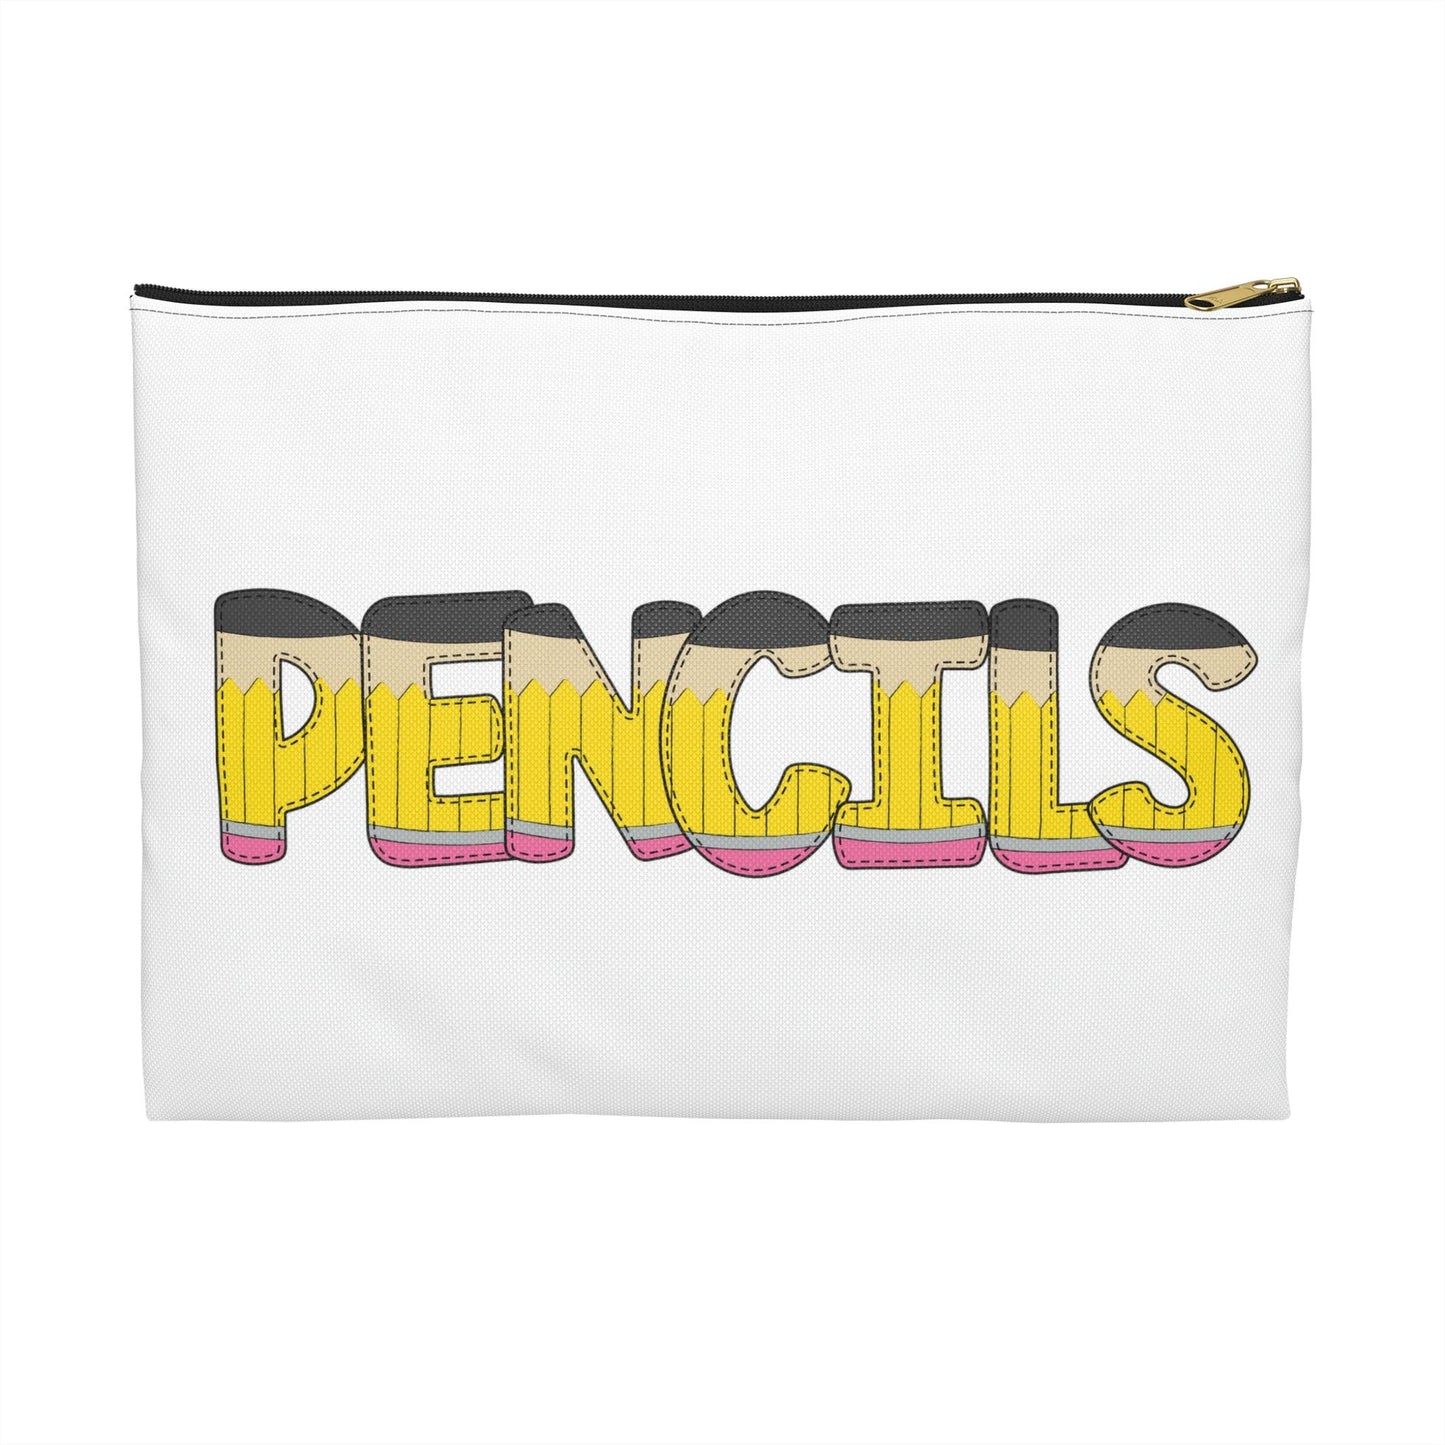 Pencil Canvas Bag - BentleyBlueCo